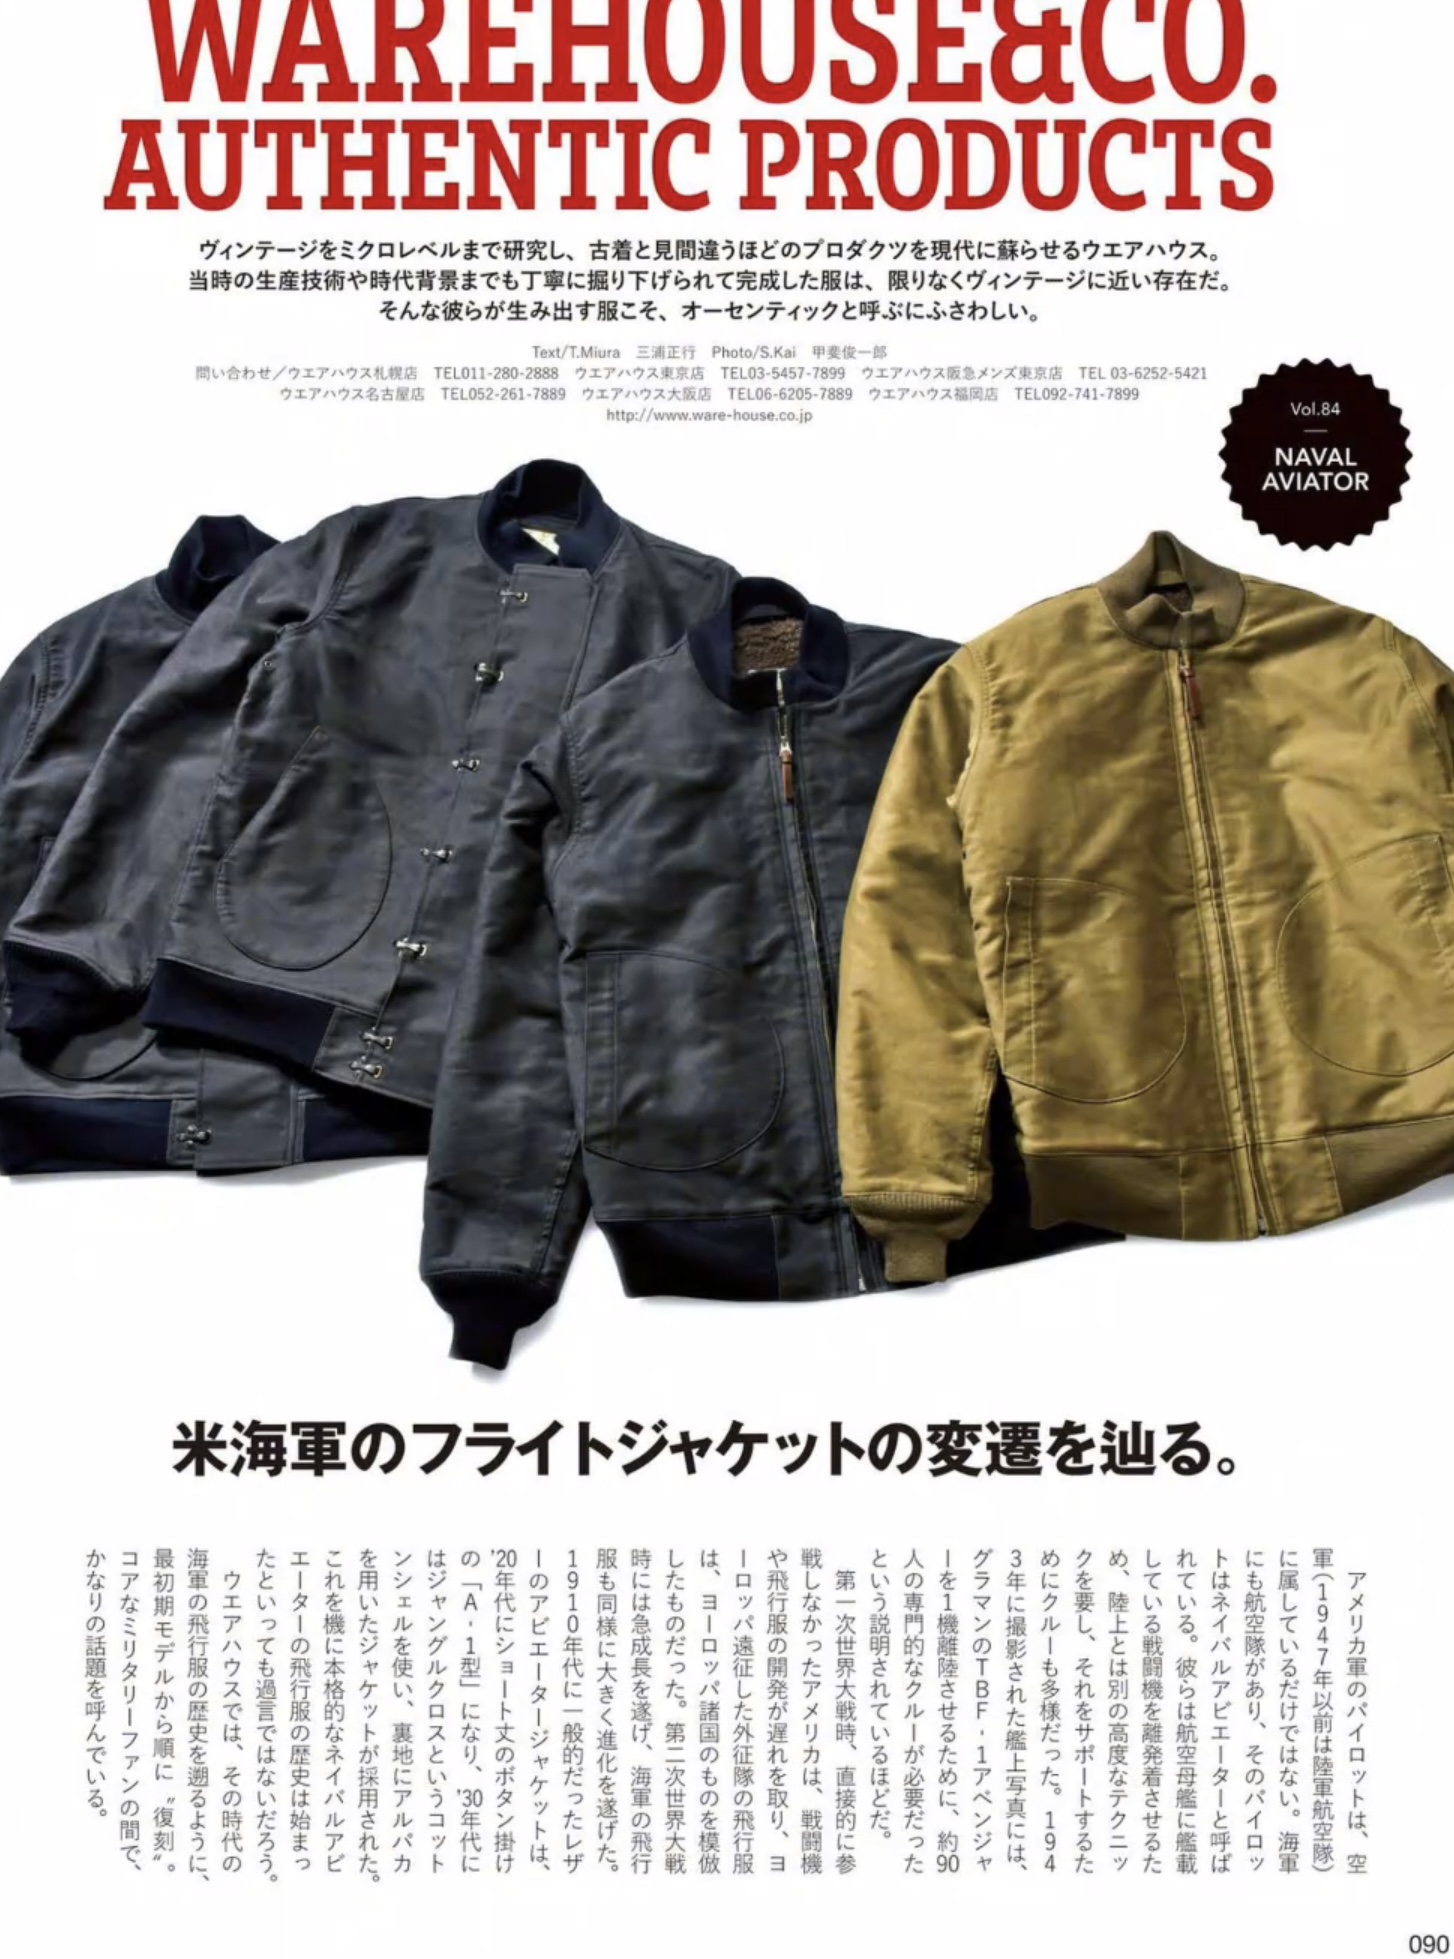 Japanese Magazines on Vintage Jacket and Etc | Page 3 | Vintage Leather ...